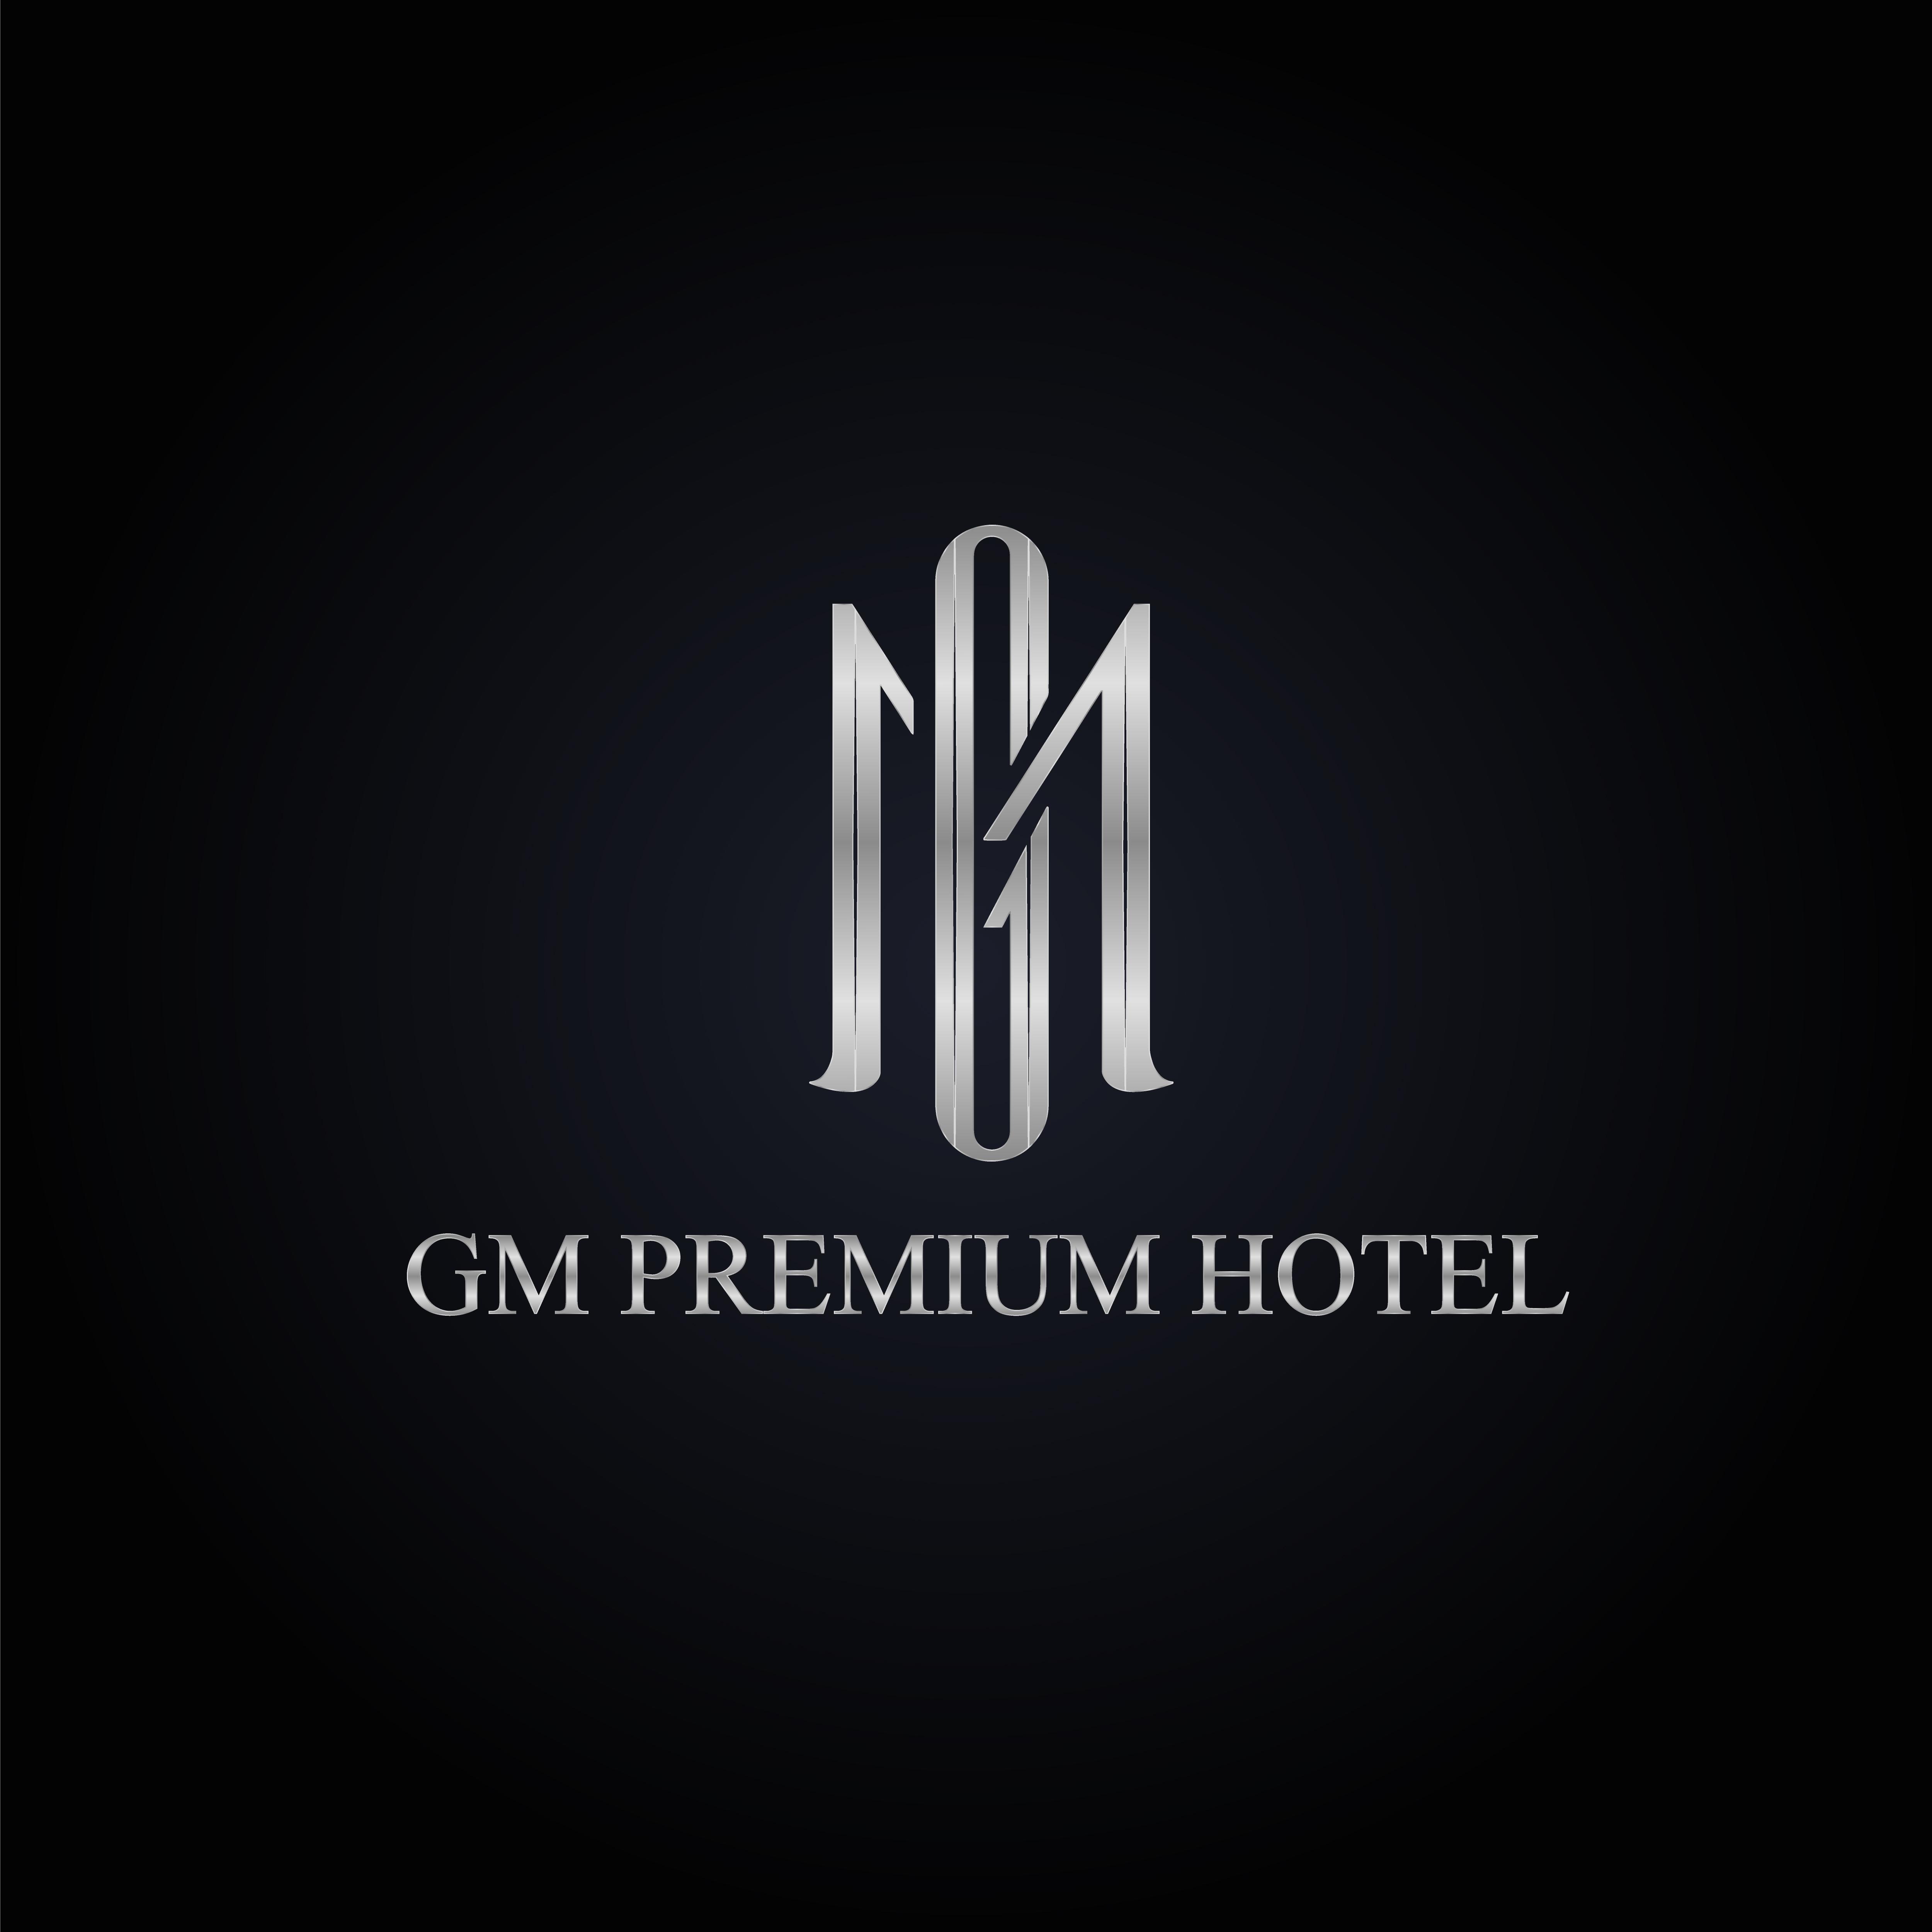 GM PREMIUM HOTEL (GM HOSPITALITY GROUP)